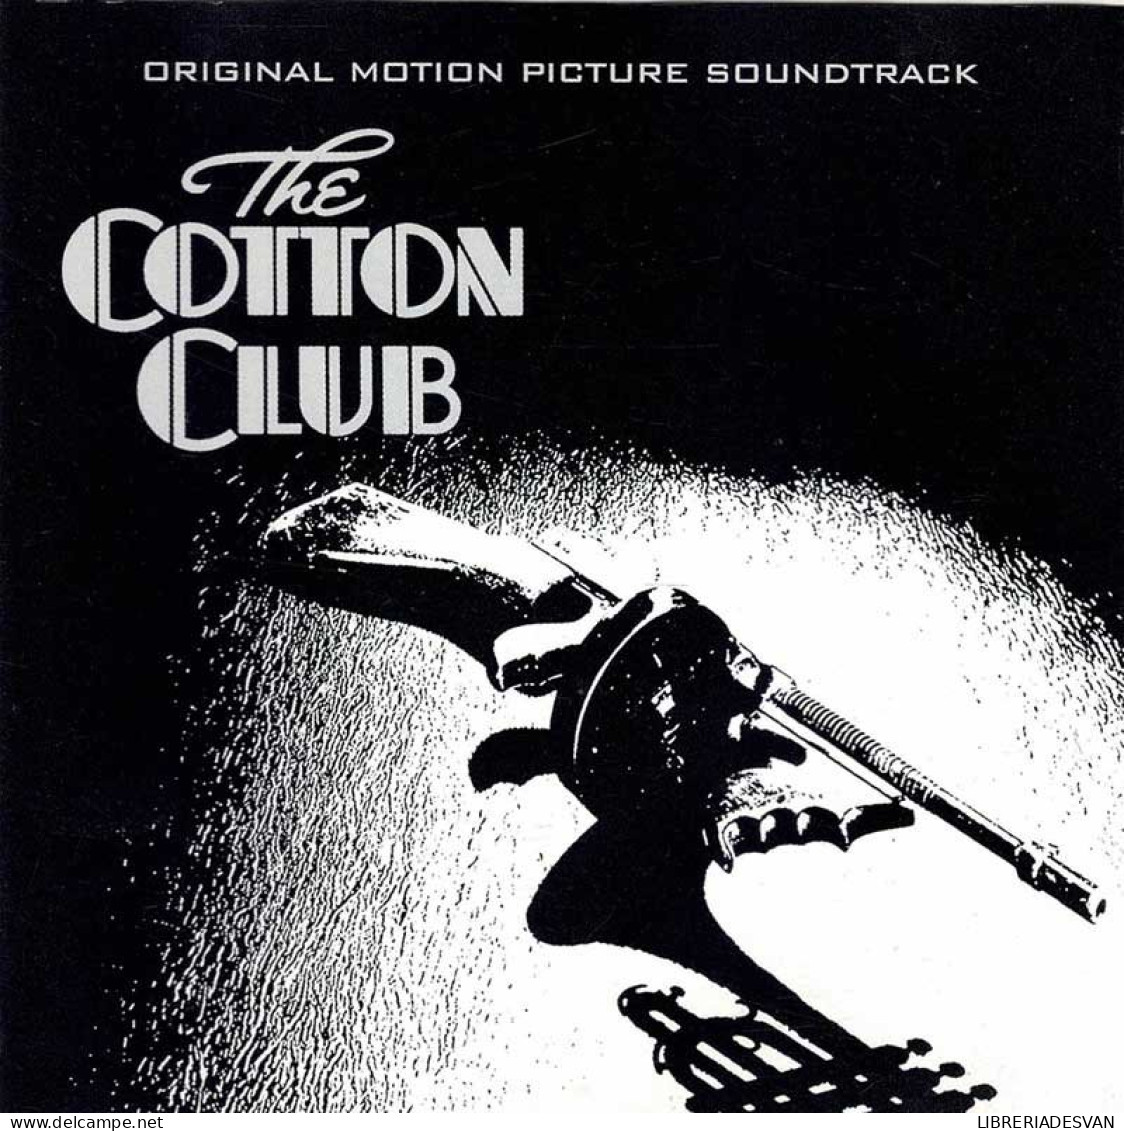 John Barry - The Cotton Club (Original Motion Picture Soundtrack). CD - Filmmuziek